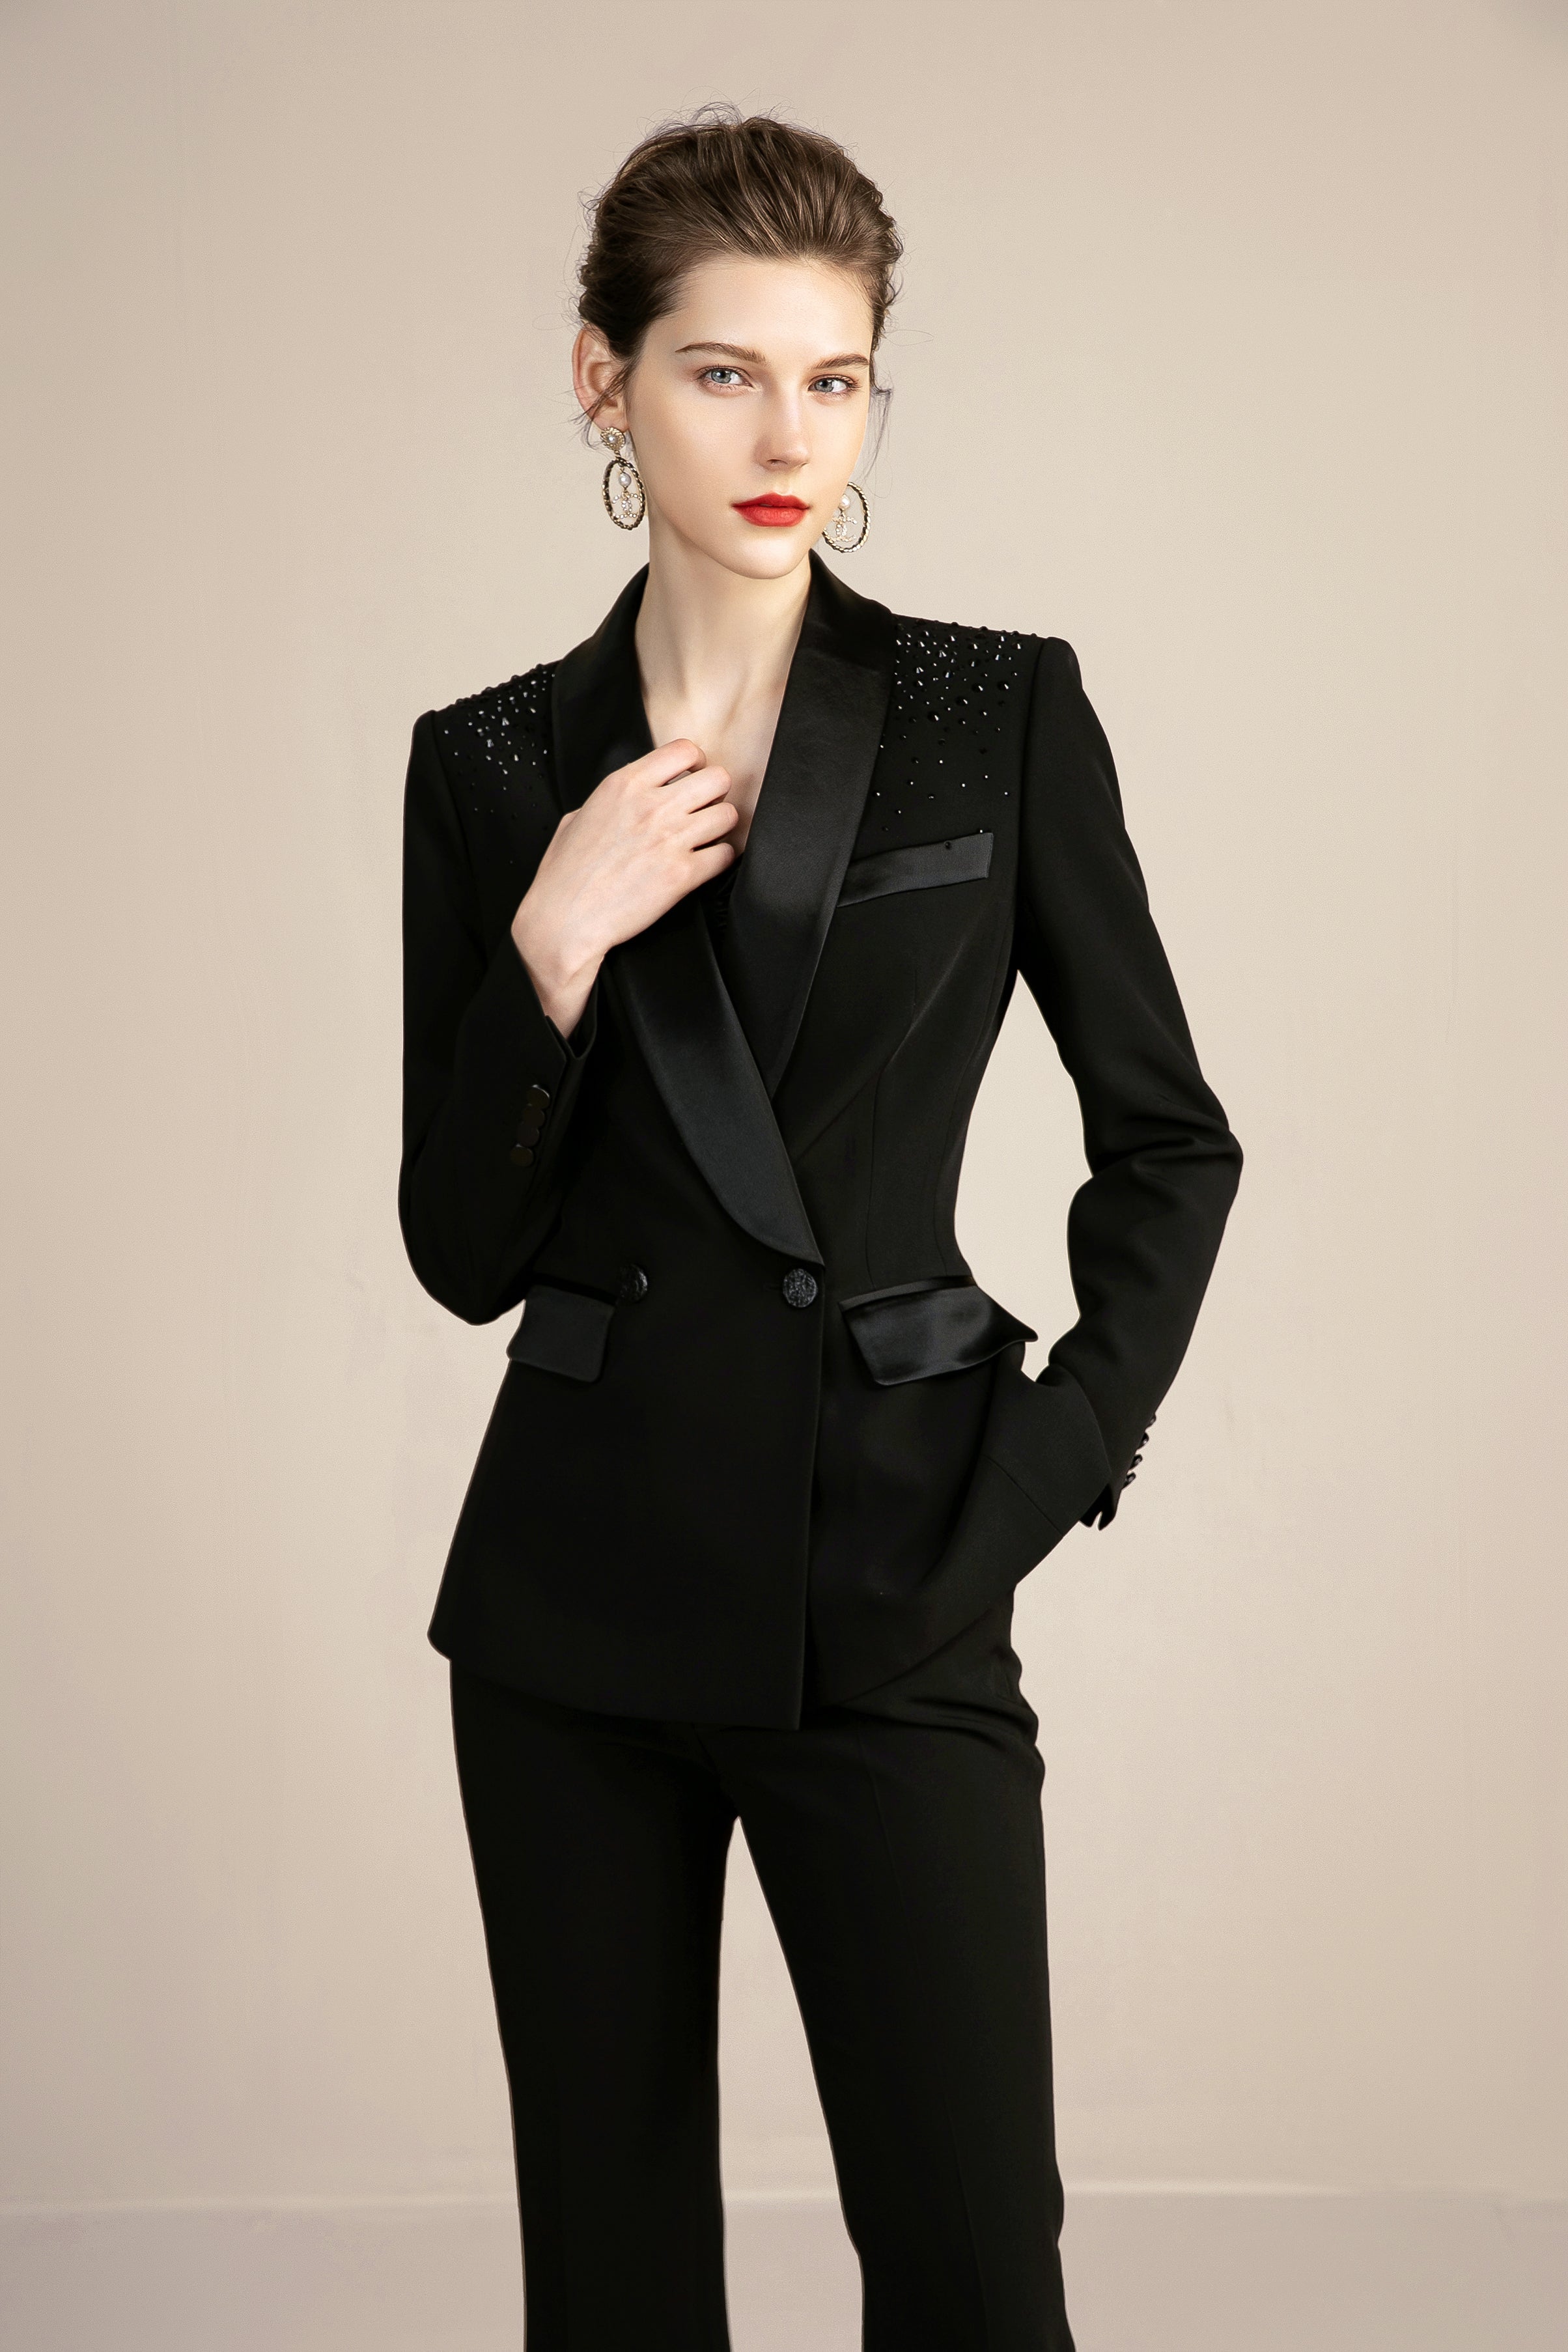 Black Pantsuit for Women, Black Formal Suit Set for Women, Black